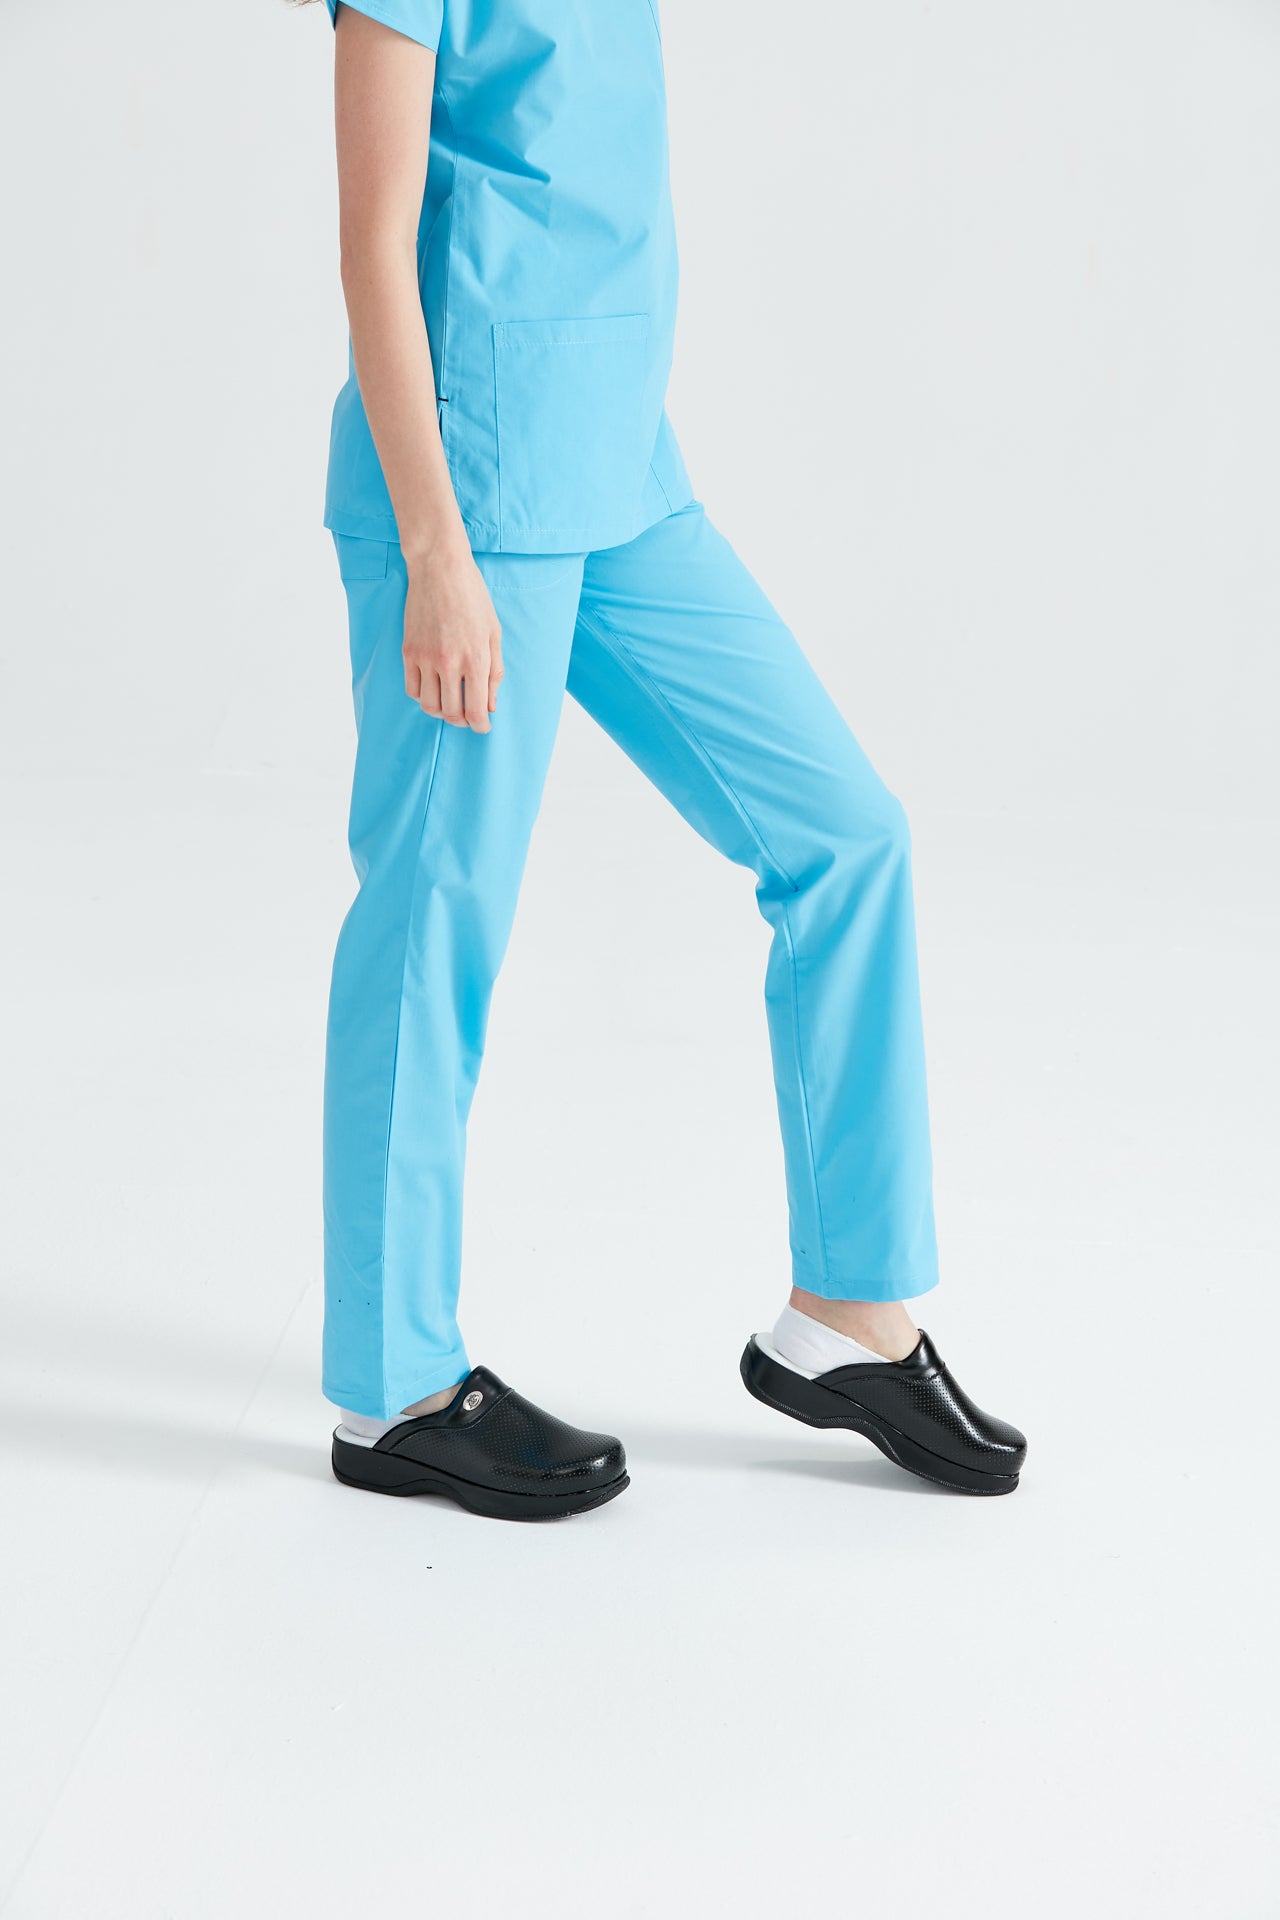 Asistenta medicala imbracata in pantaloni Turquoise, vedere din profil